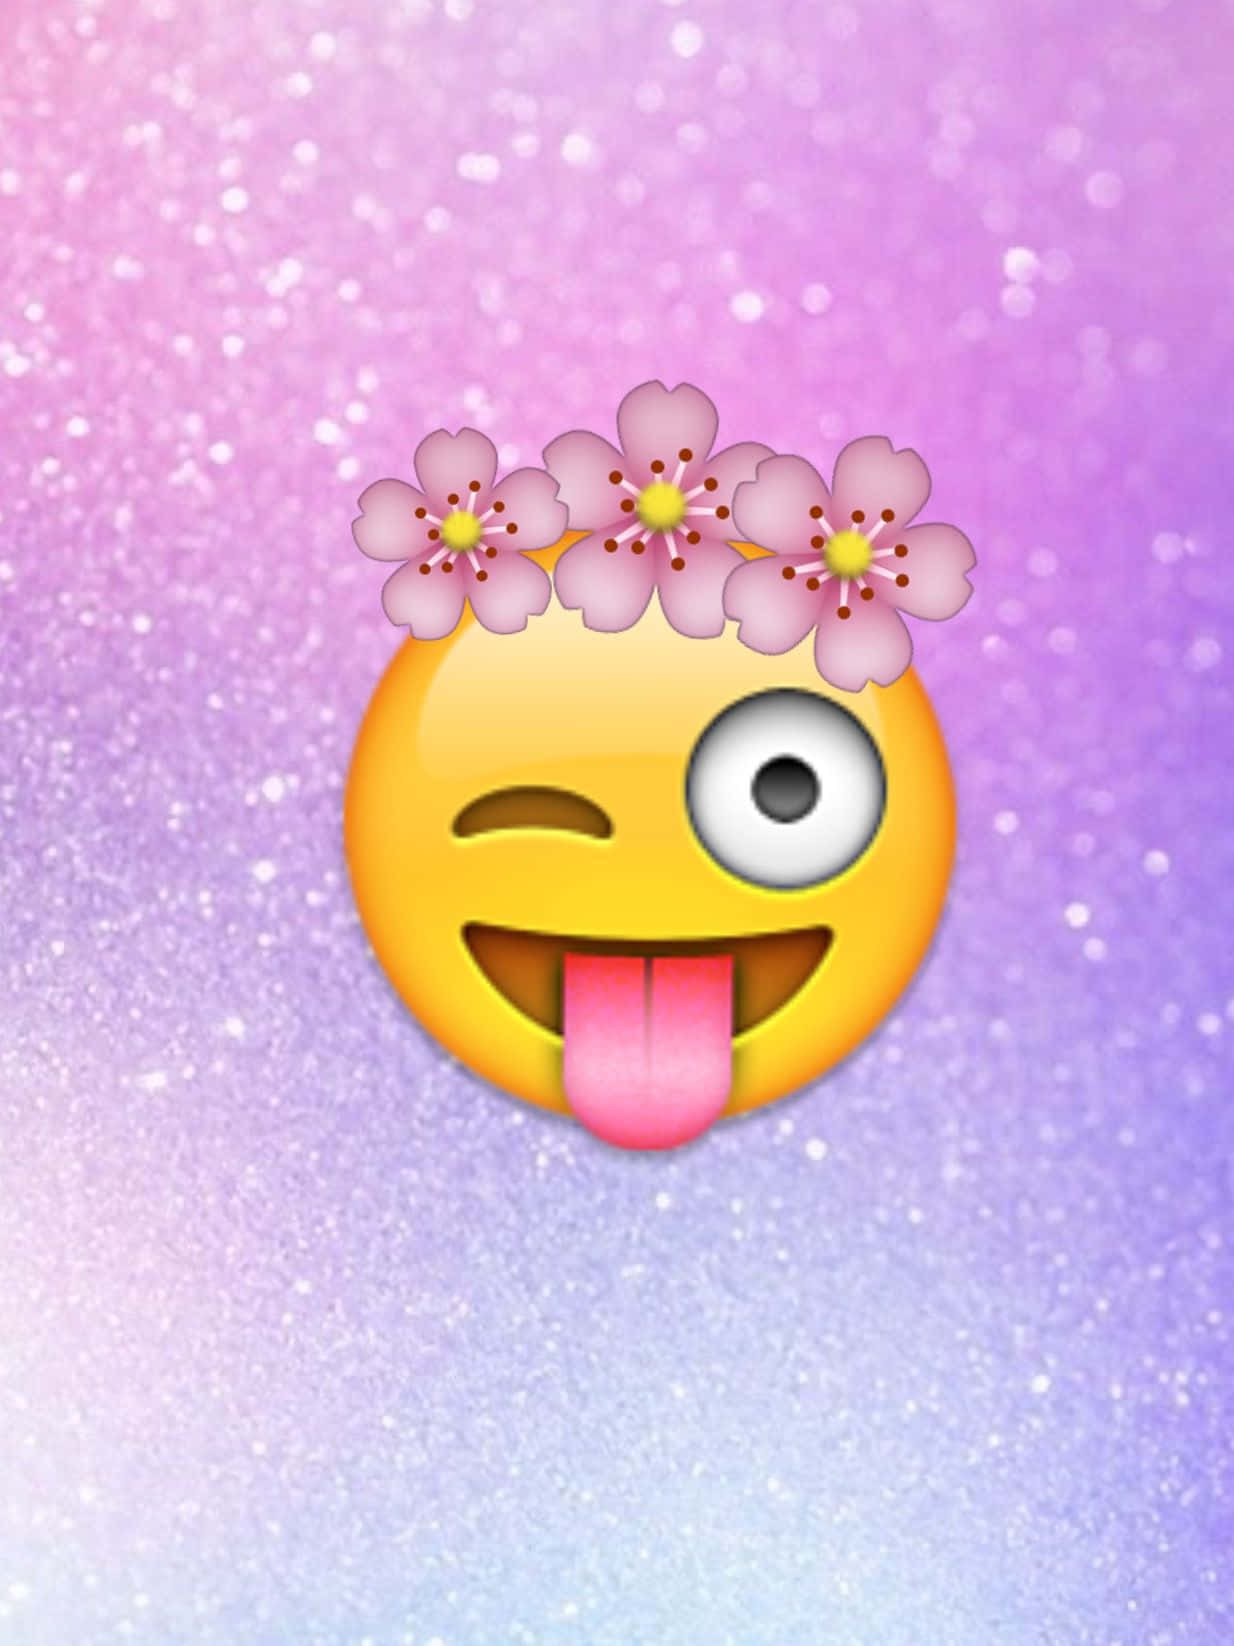 Free Emoji Girl Wallpaper Downloads, [100+] Emoji Girl Wallpapers for FREE  